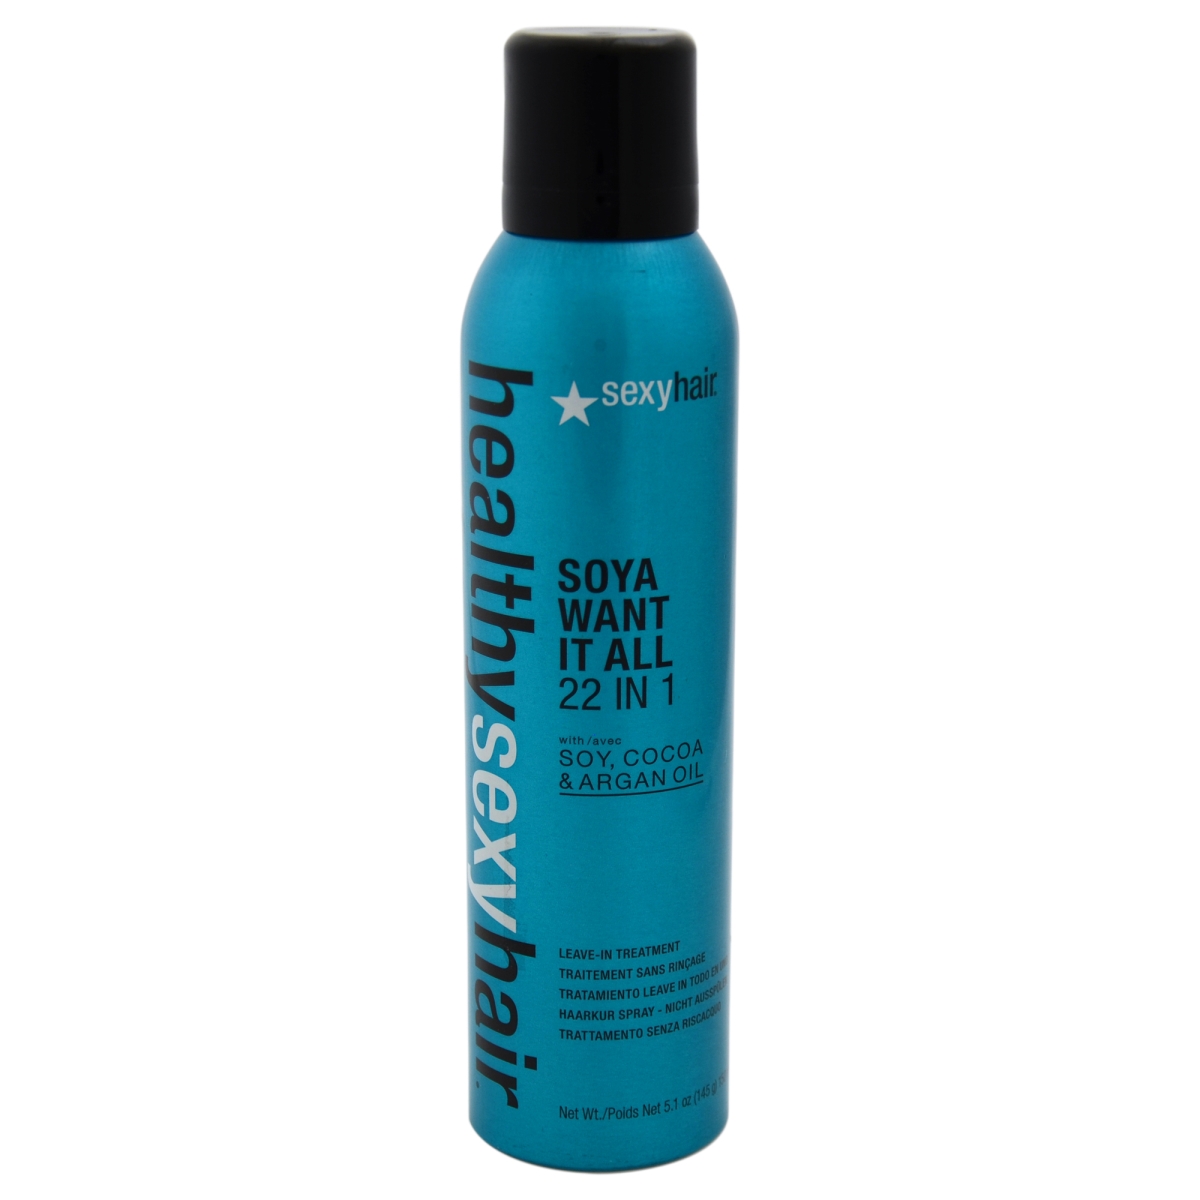 U-hc-10445 5.1 Oz Unisex Soya Want It All 22 In 1 Leave-in Treatment Hair Spray